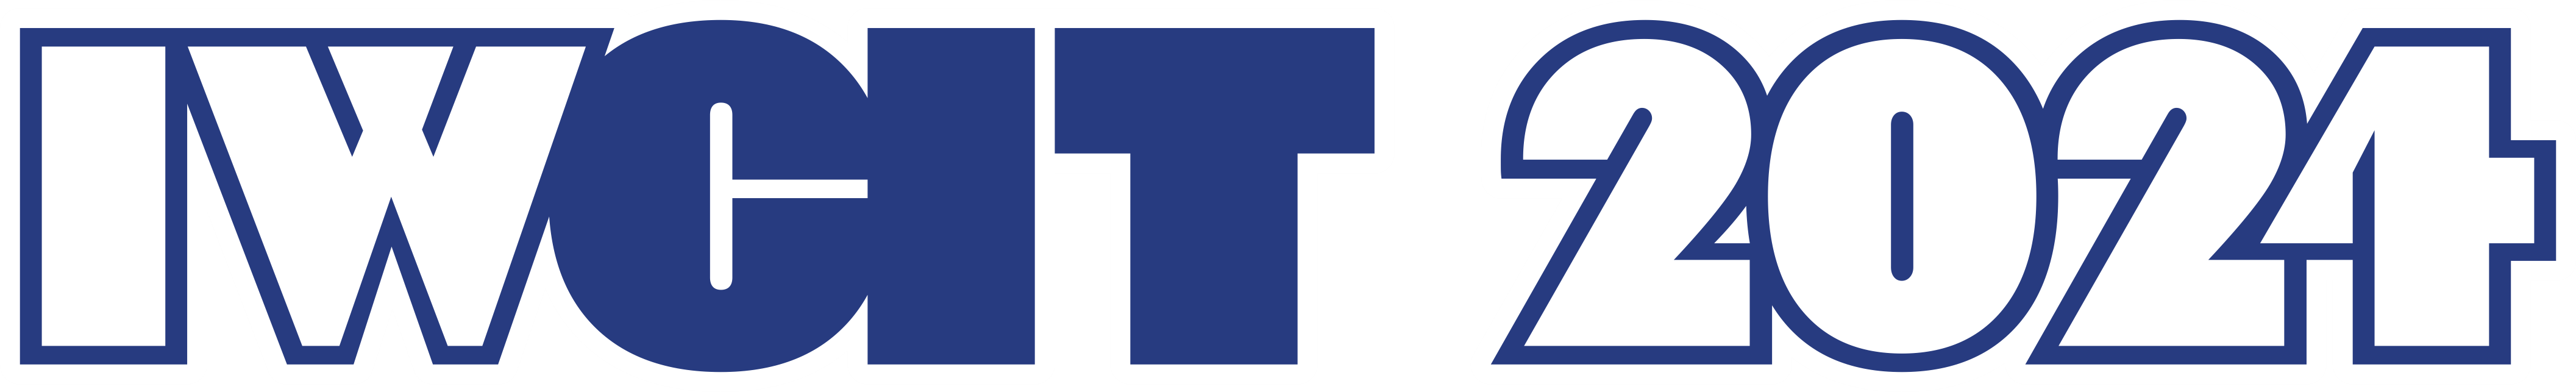 iwcit-logo-2024